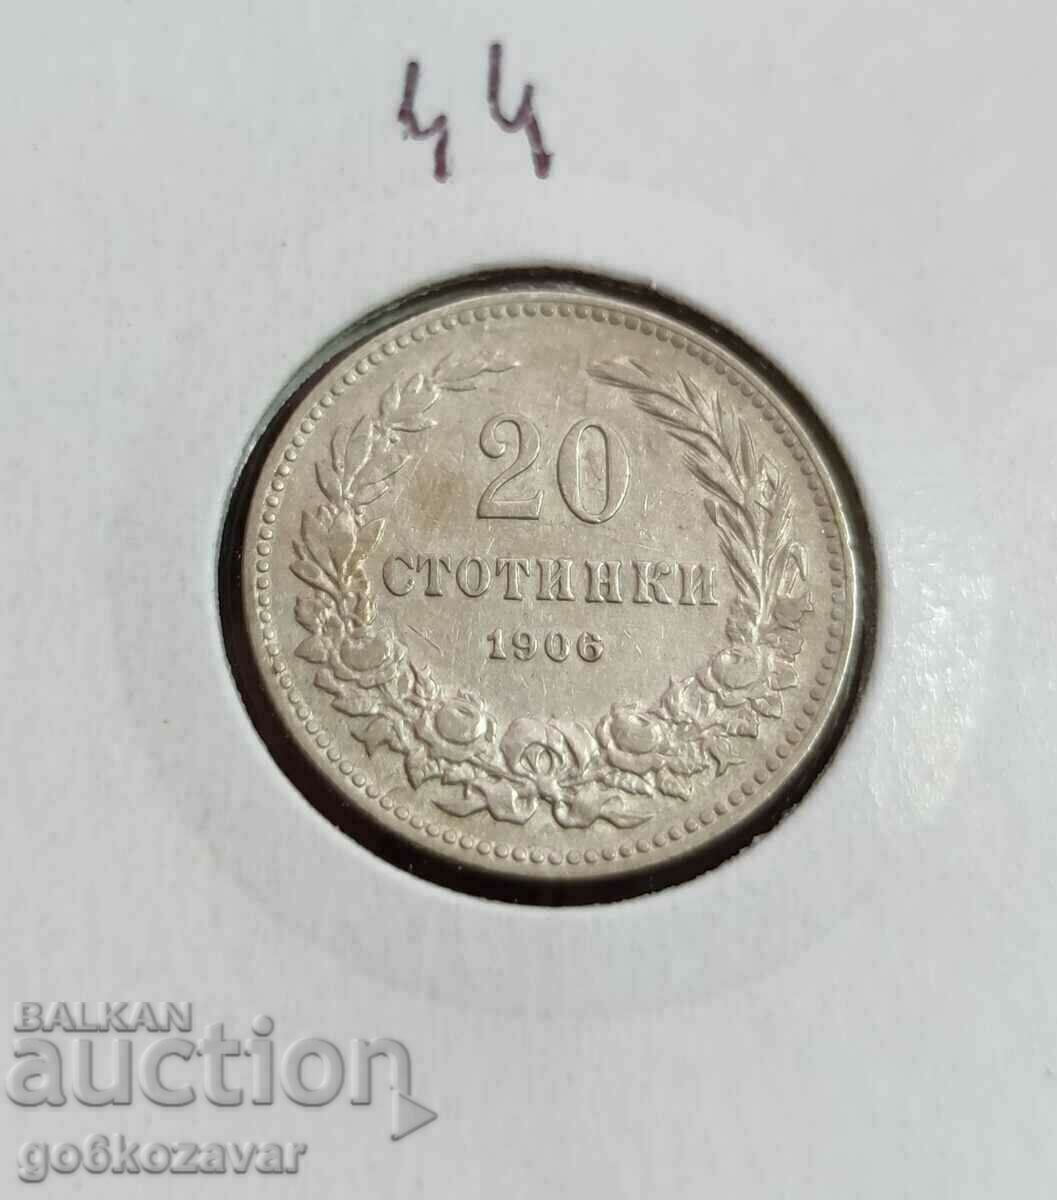 Bulgaria 20 cents 1906 Excellent!